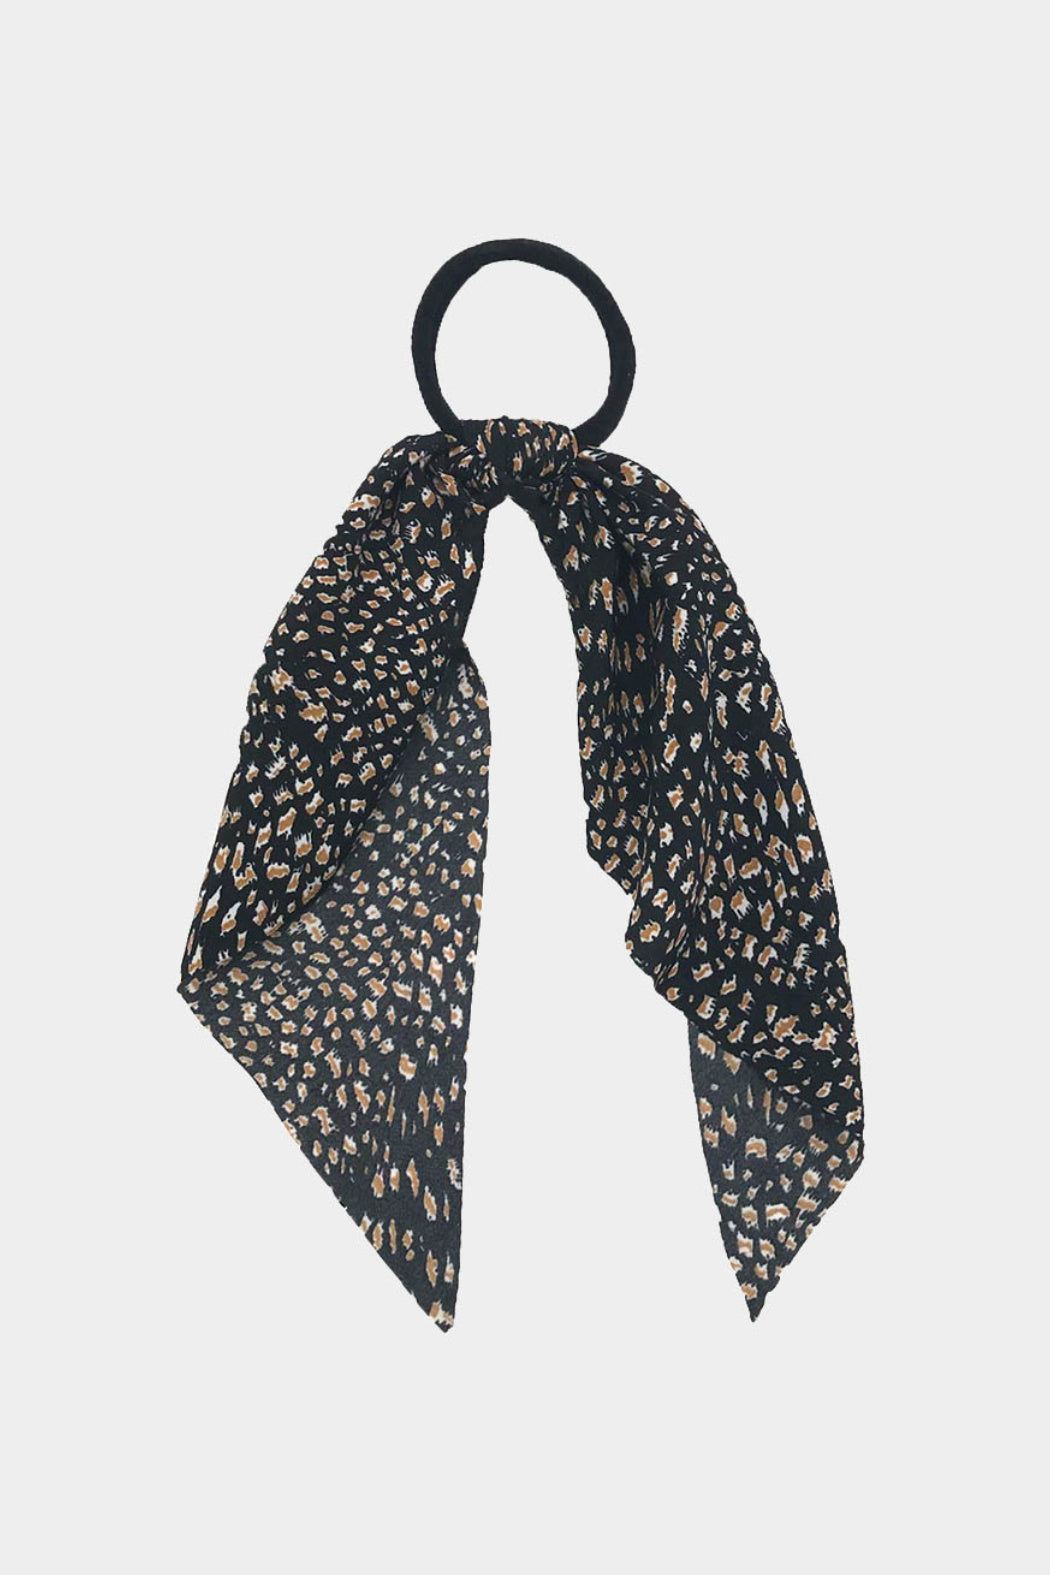 Black Leopard Hair Tie - Embellish Your Life 